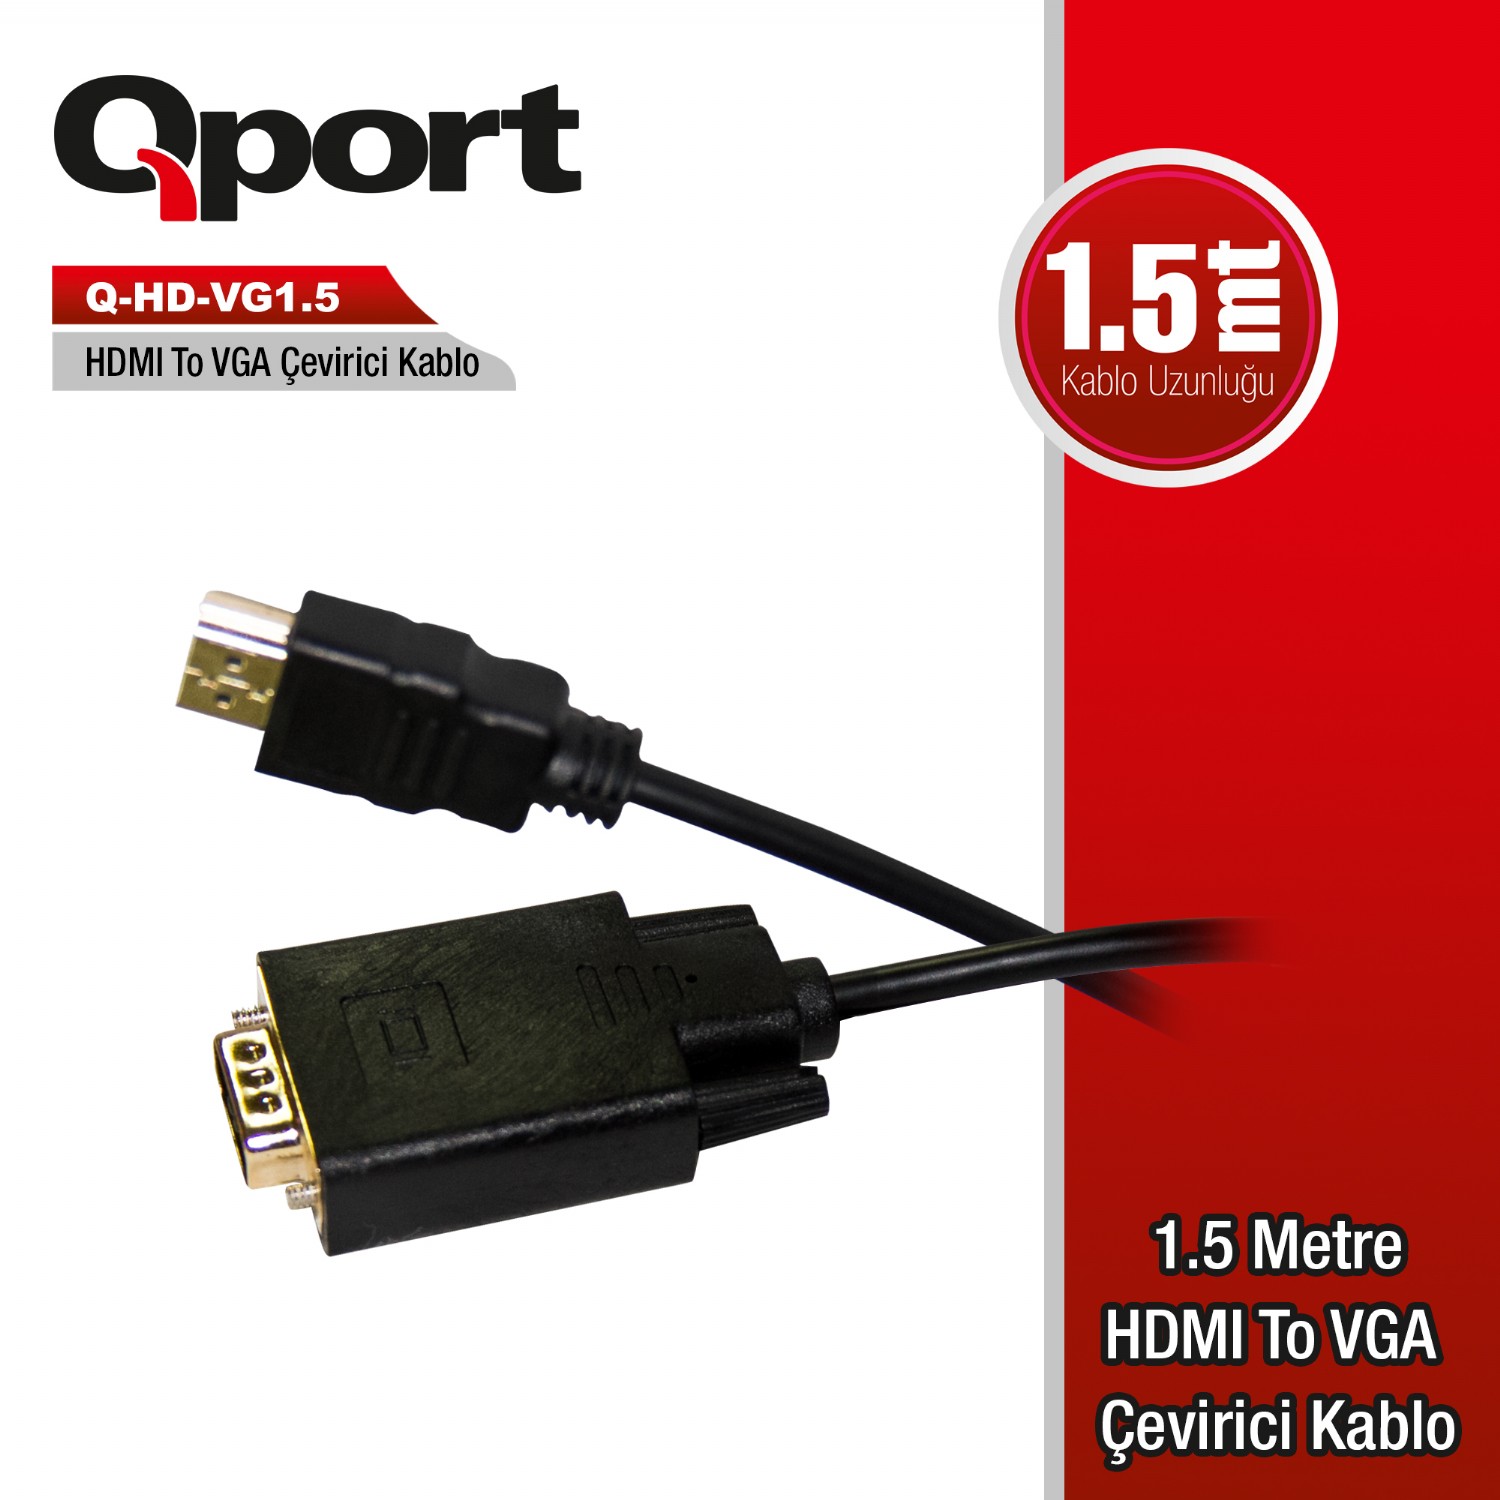 Q-HD-VG1.5